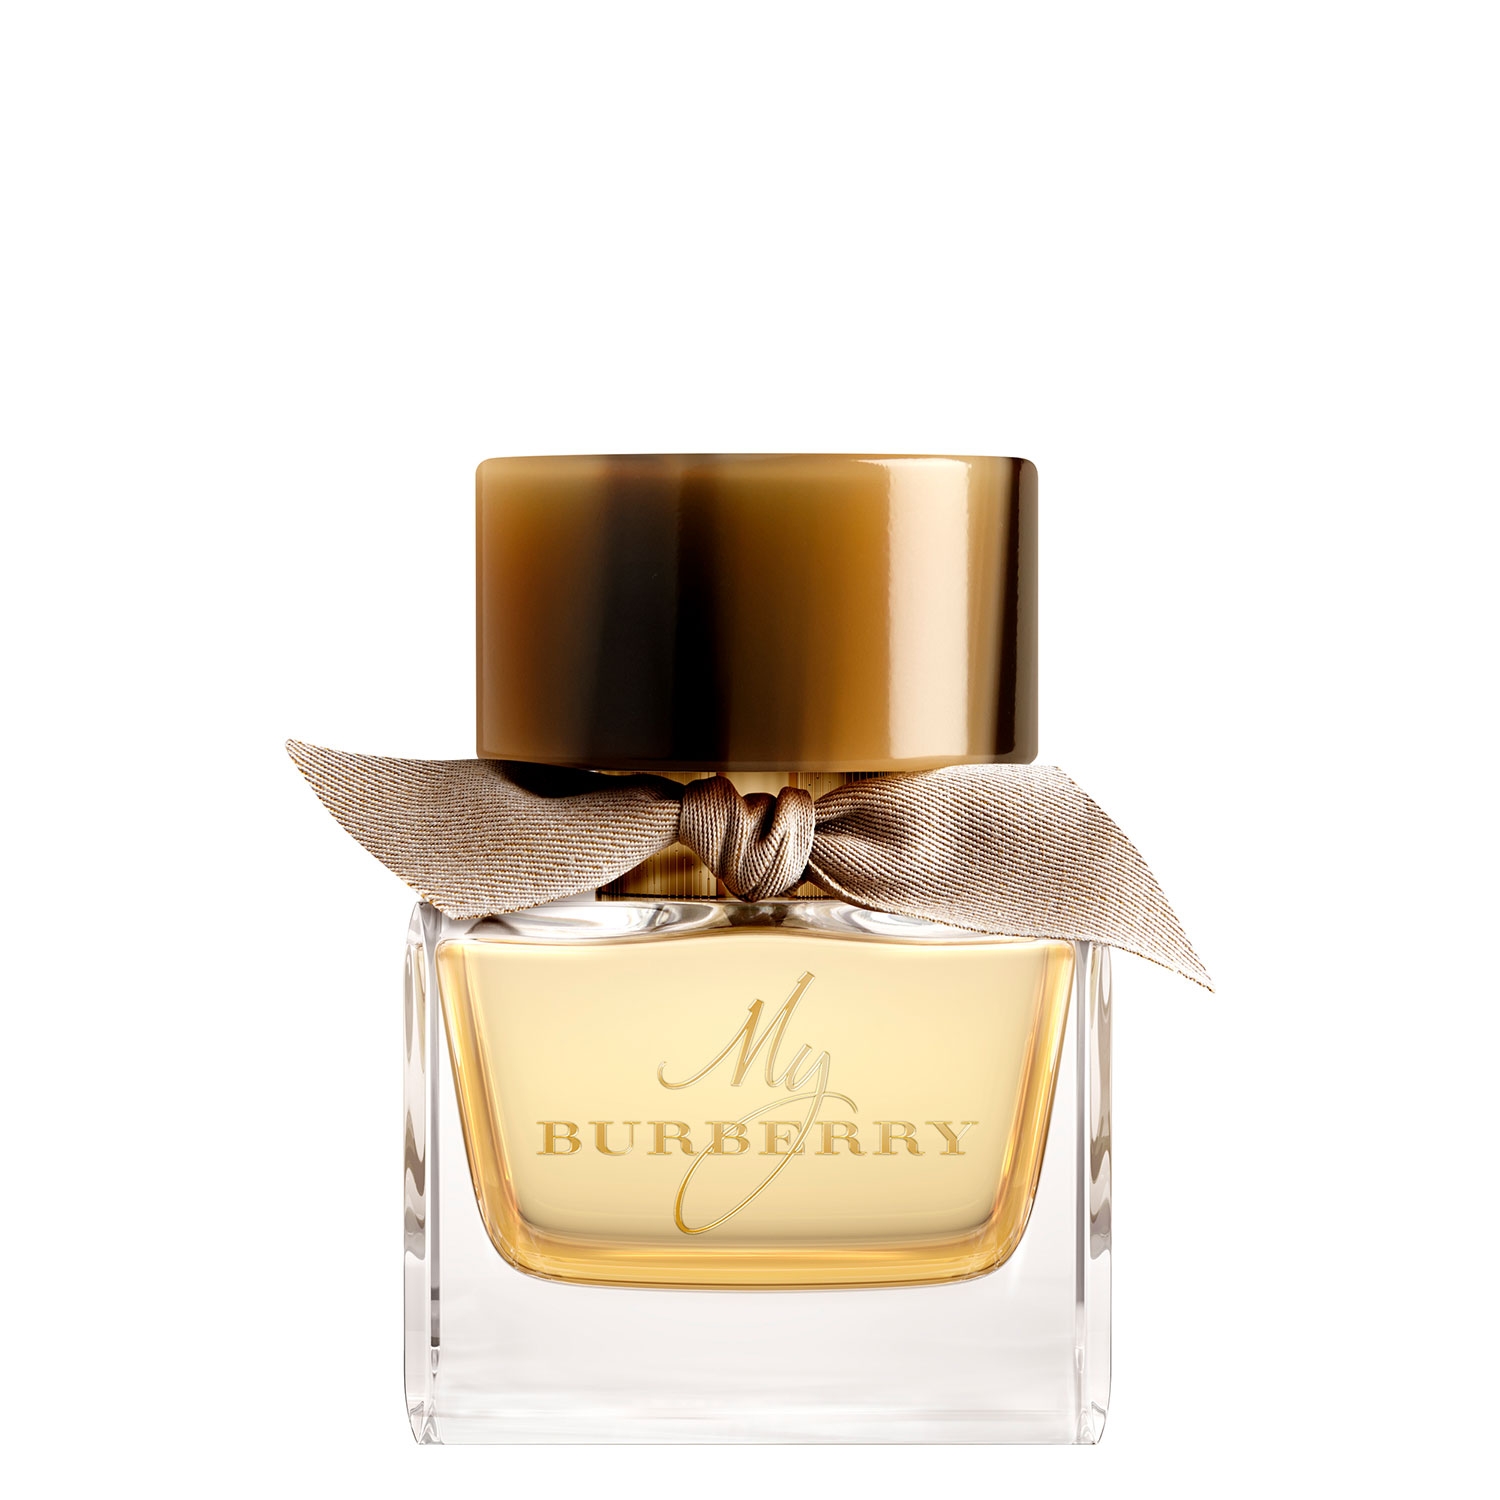 Produktbild von My Burberry - Eau de Parfum